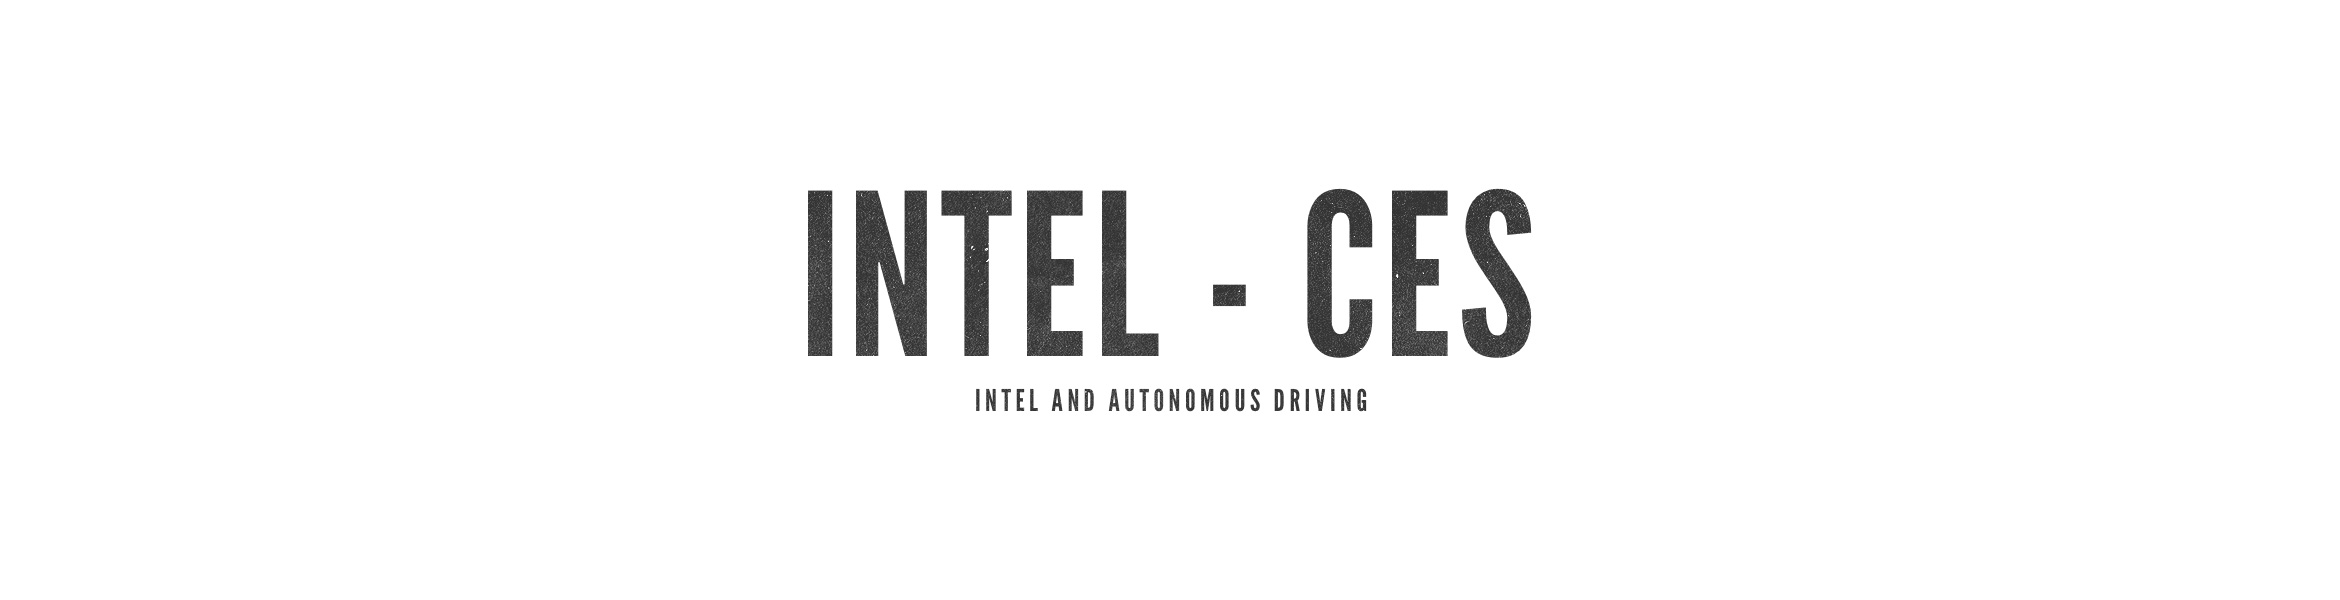 Intel-Title-RET